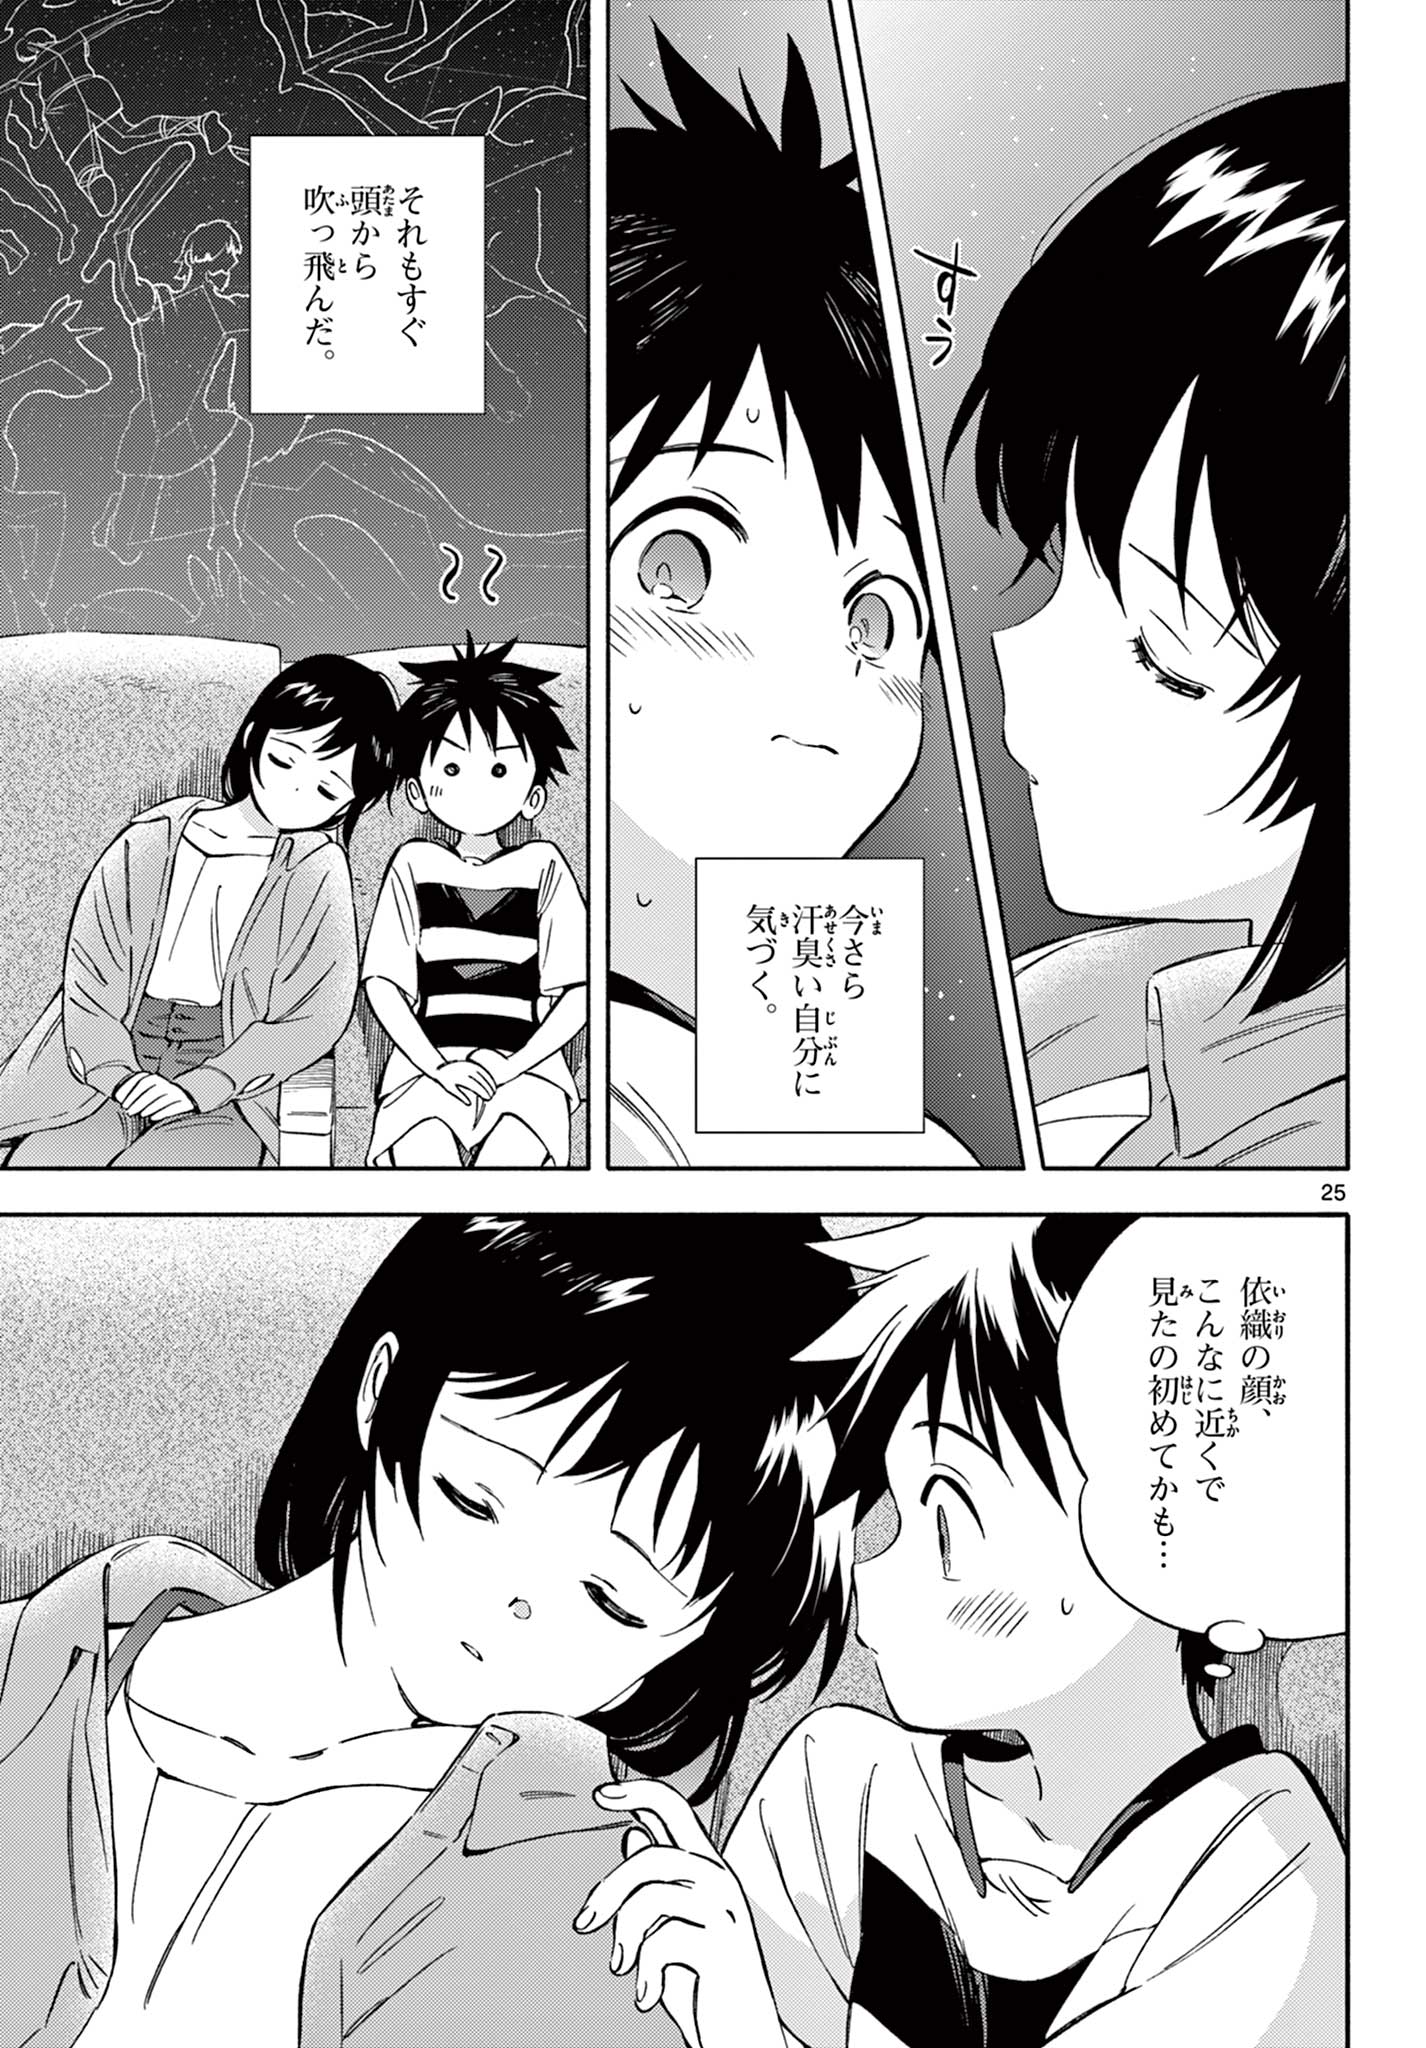 Nami no Shijima no Horizont - Chapter 15.2 - Page 10